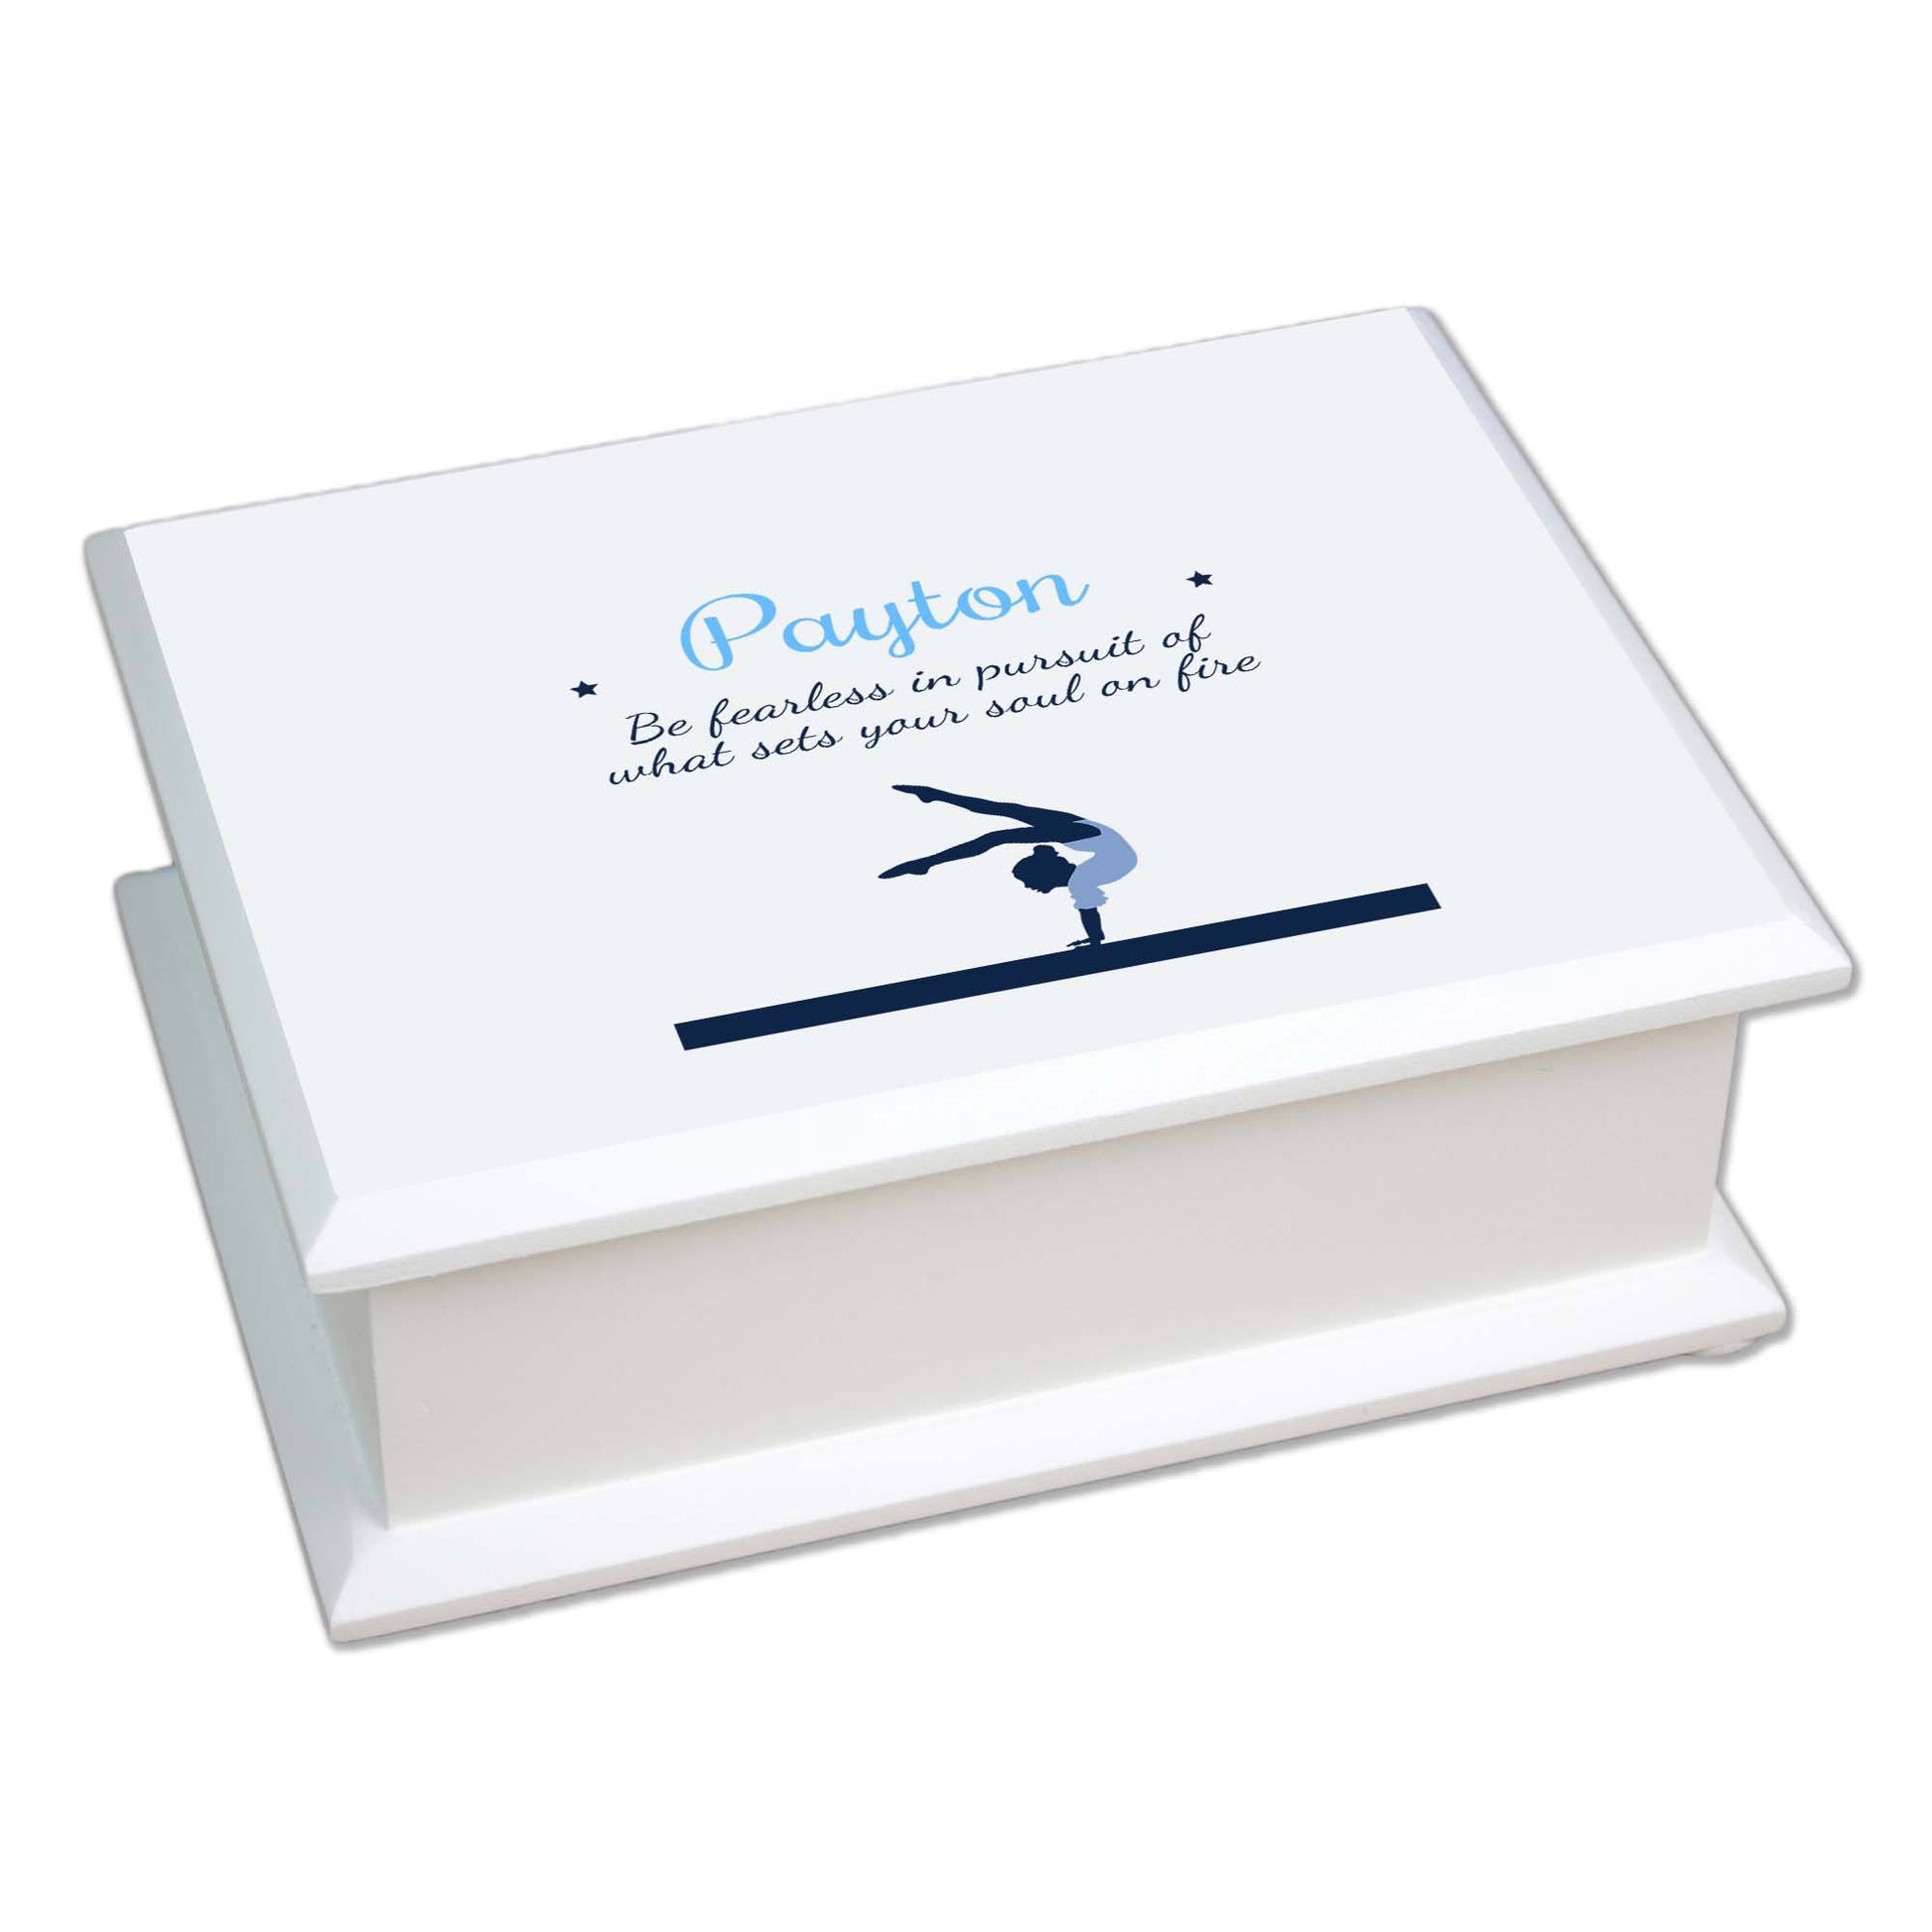 Personalized Lift Top Jewelry Box with Gymnastics design